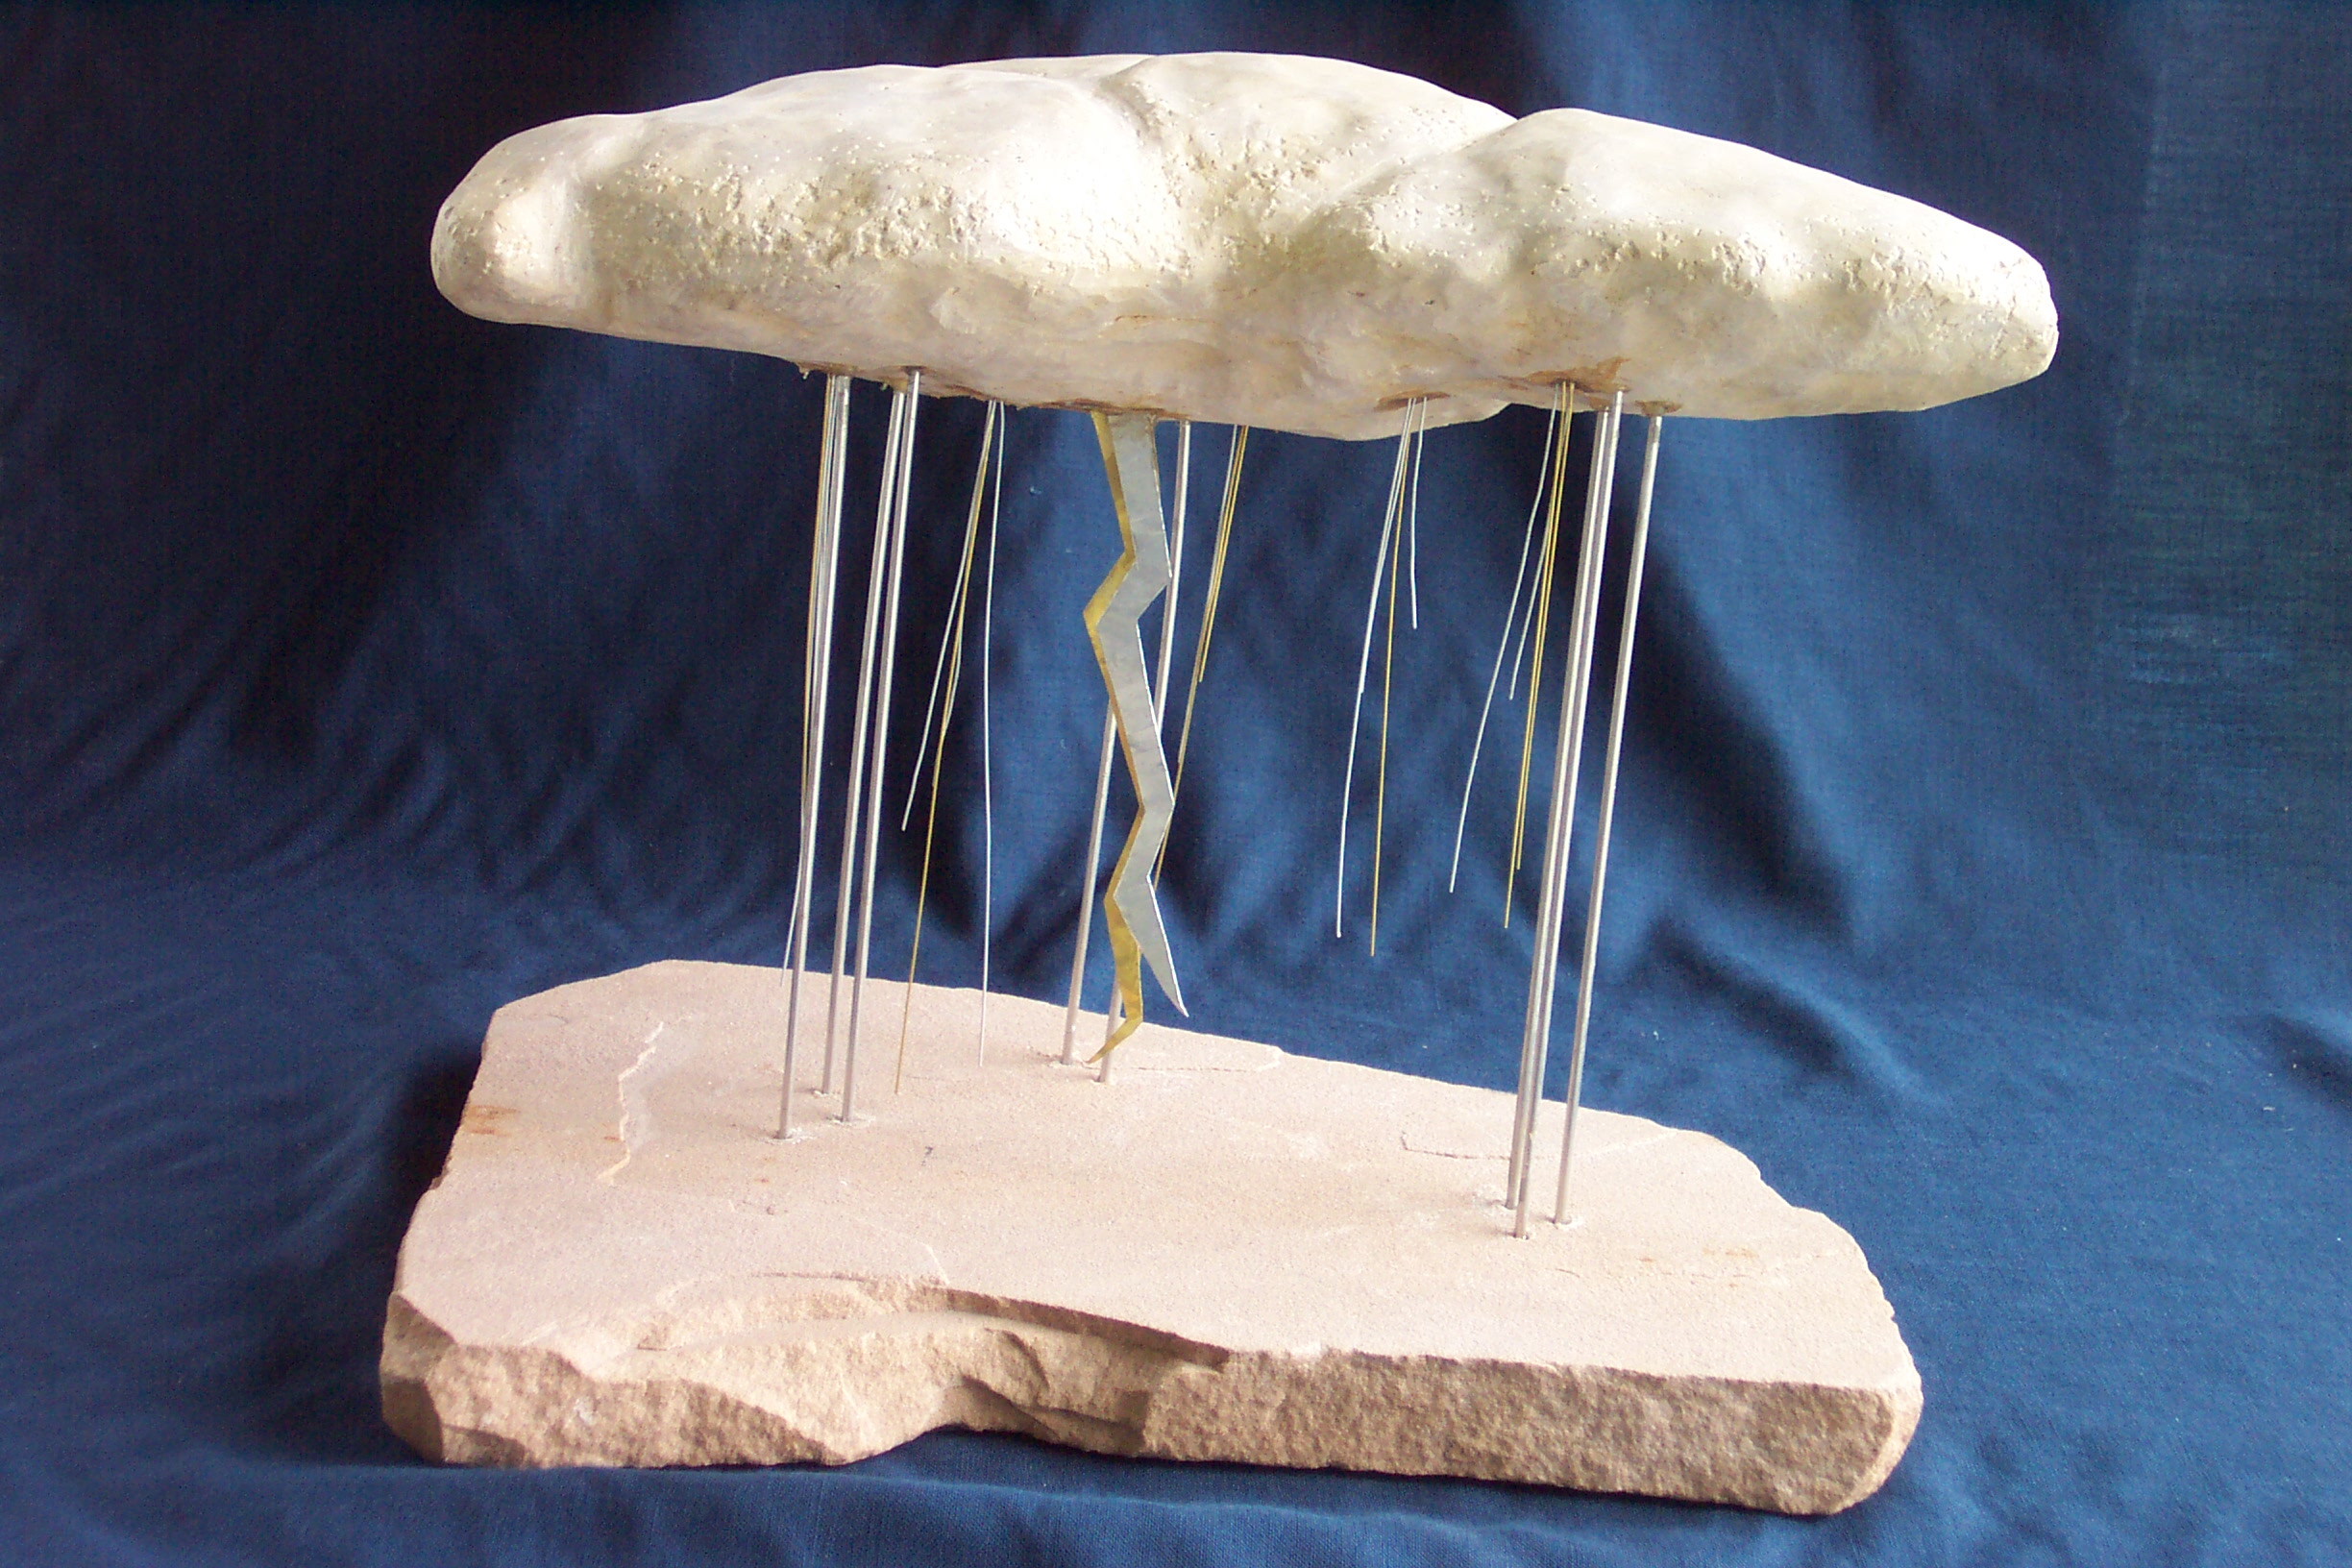 Patty McPhee “Desert Thunder”,14” X 15” X 11”, limestone, quartzite and metals